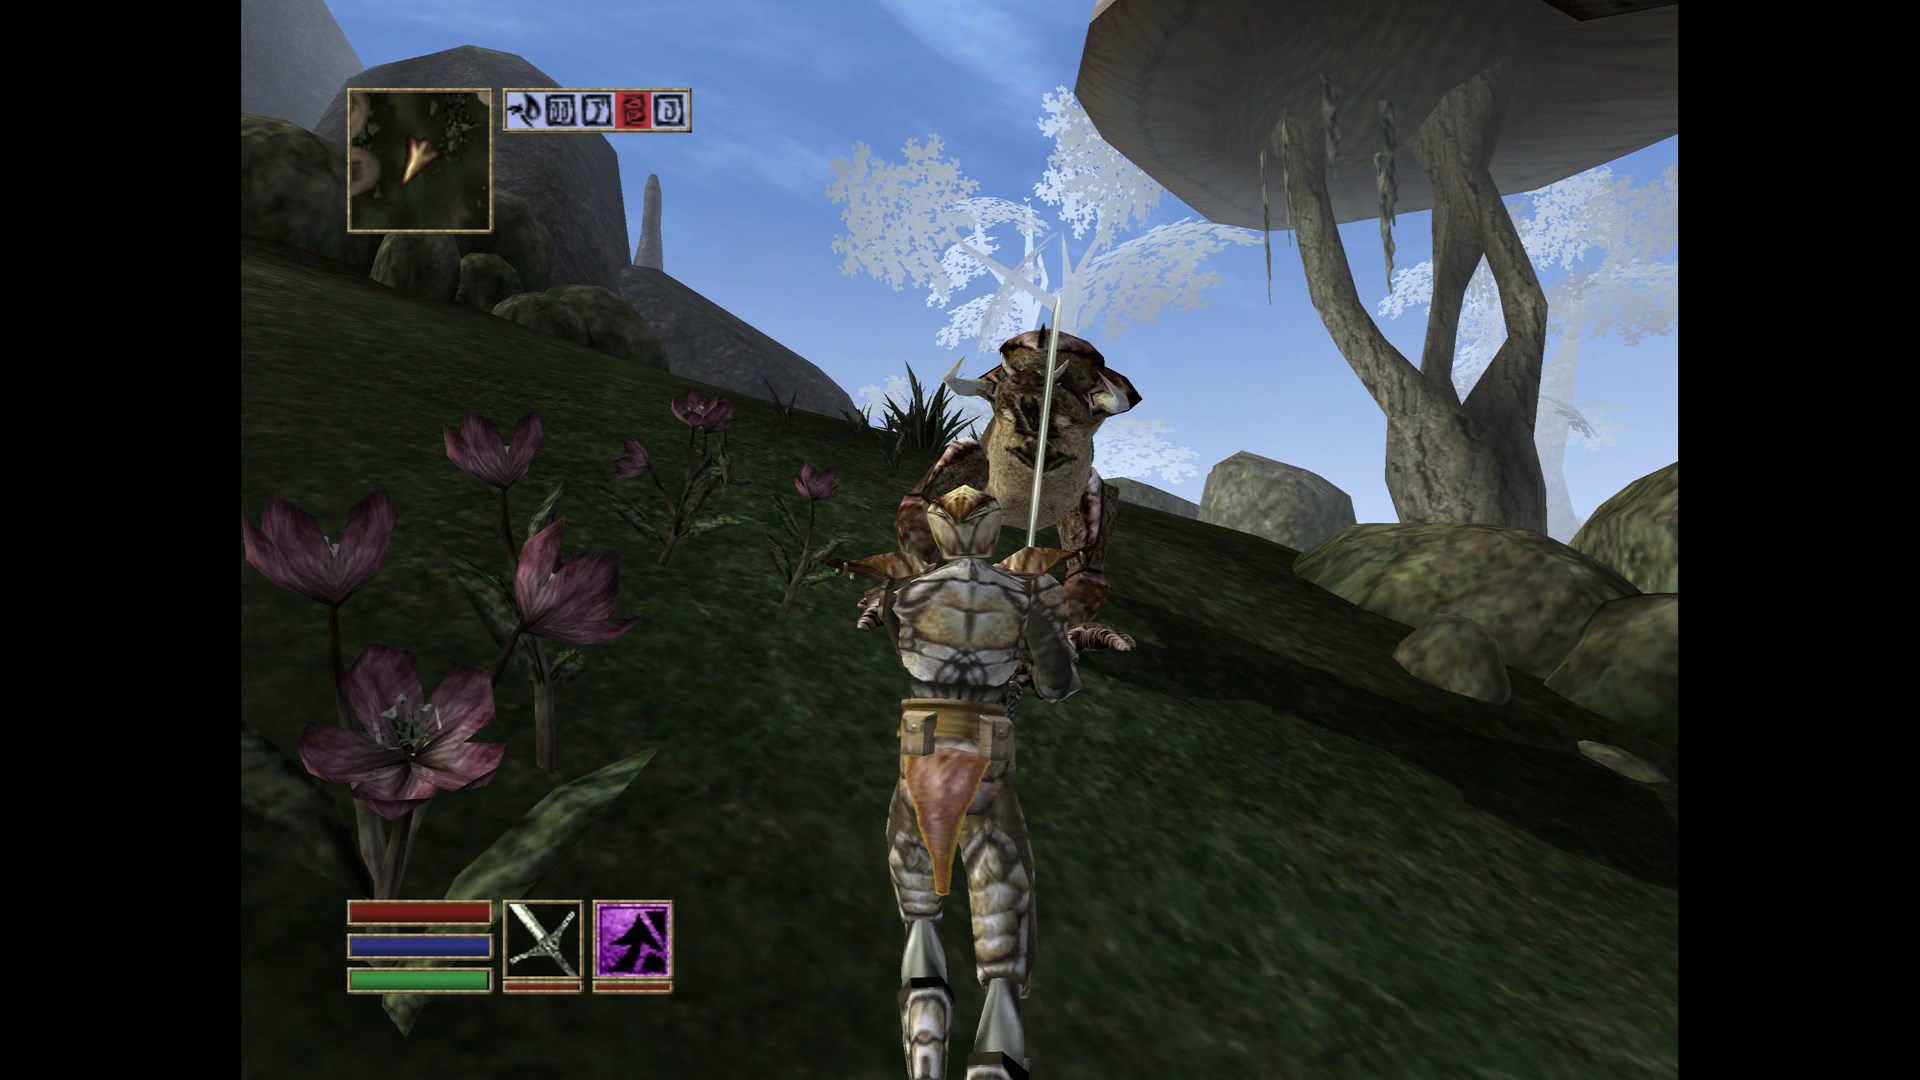 Buy The Elder Scrolls III: Morrowind 